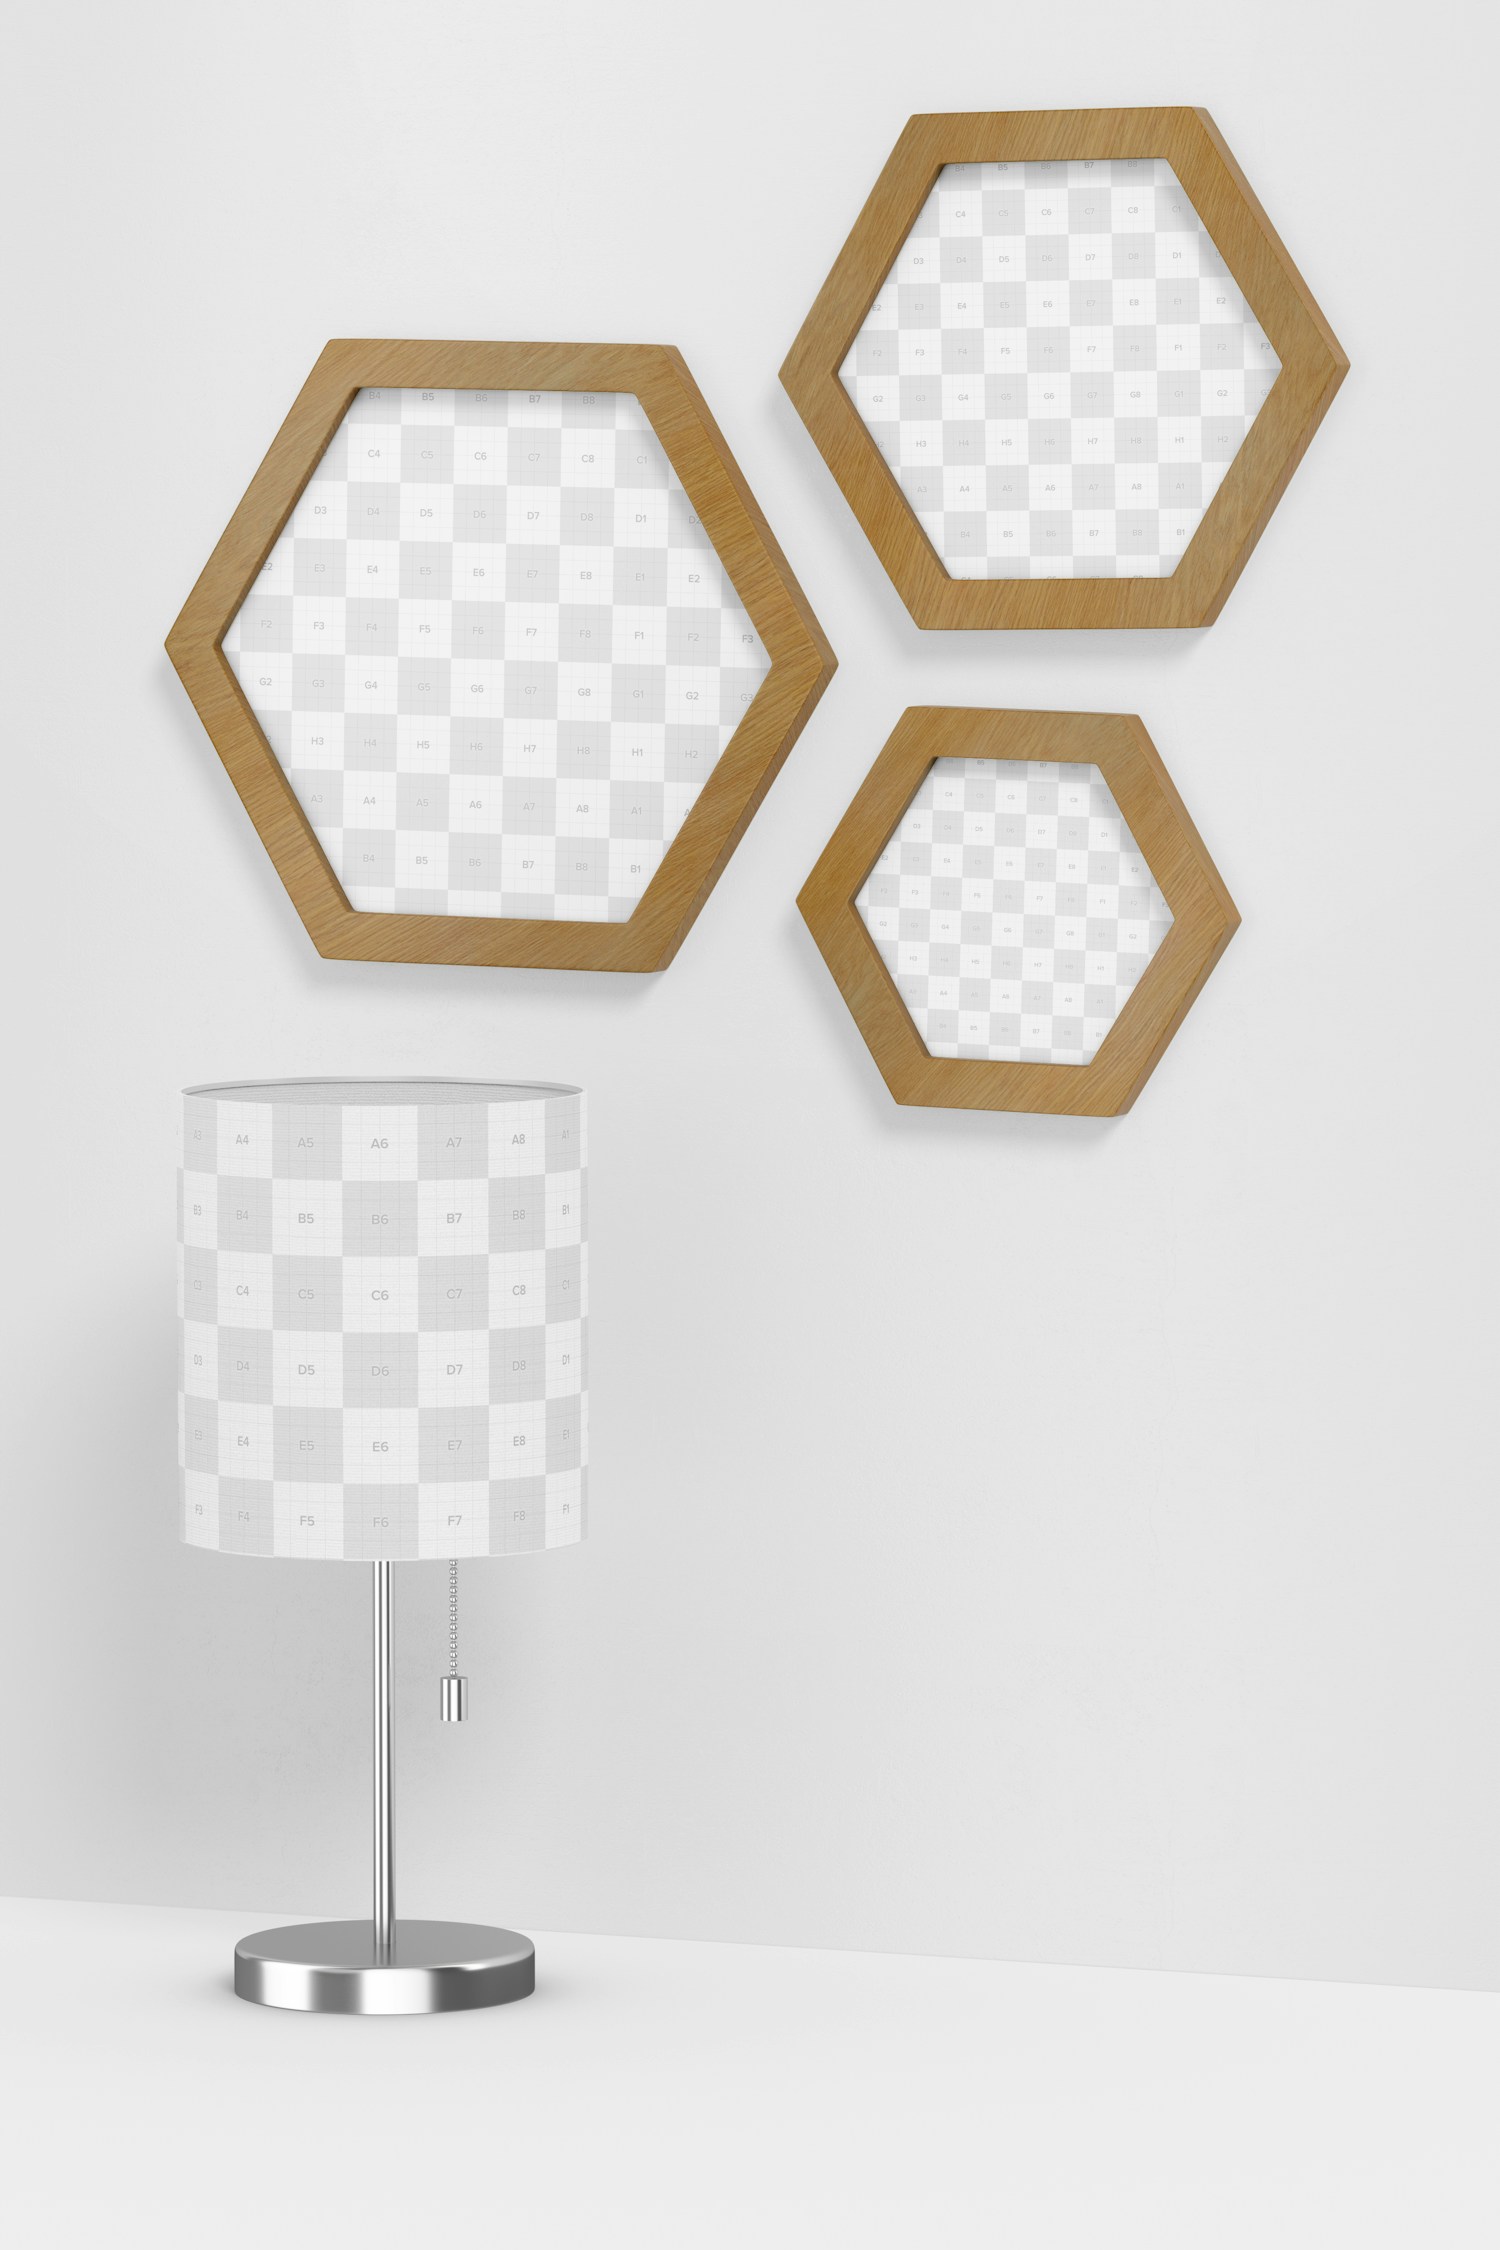 Hexagon Wall Photo Frames with Lamp Mockup